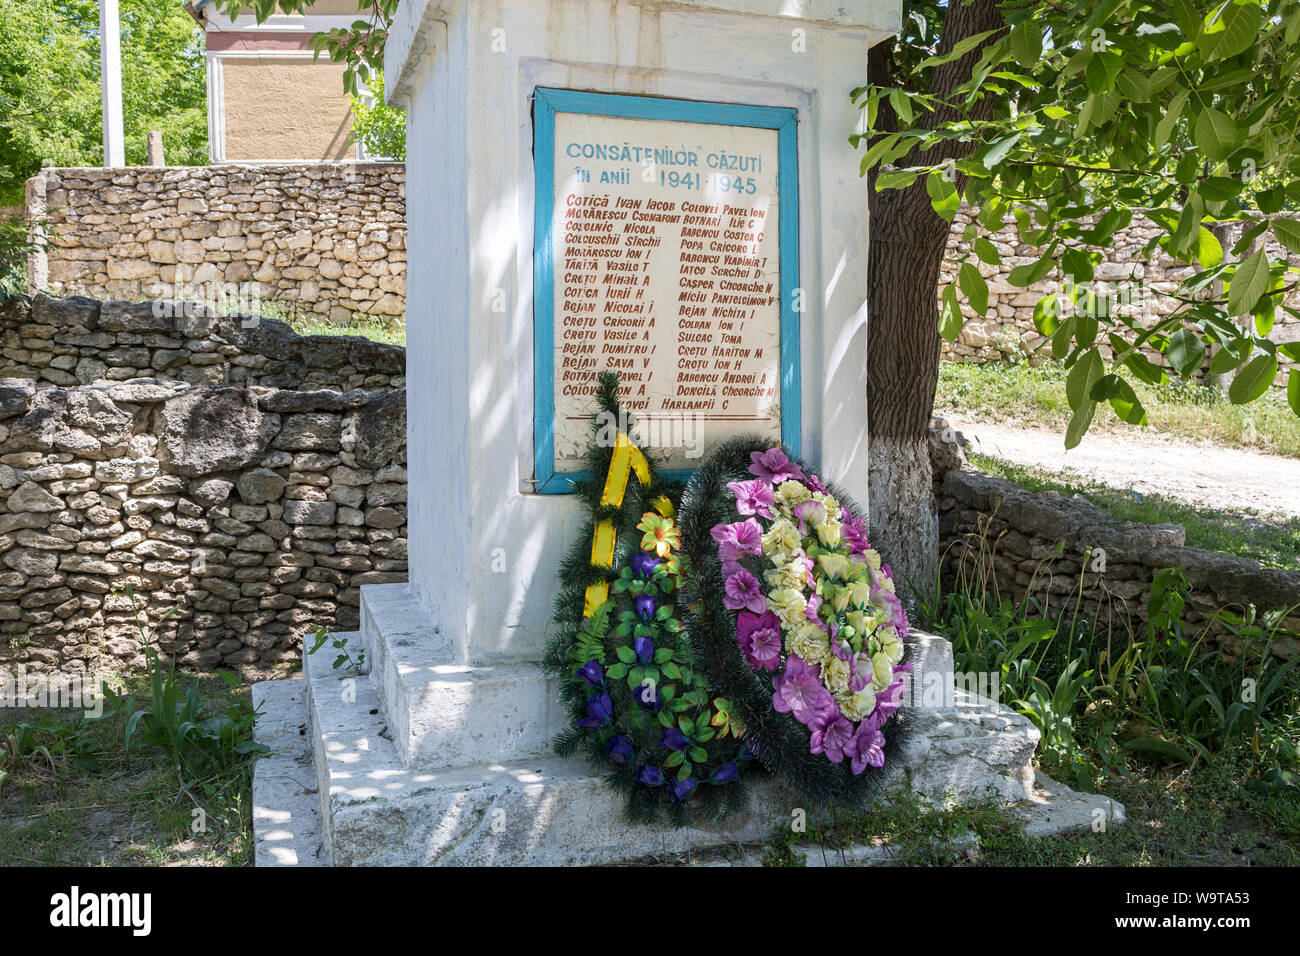 World War Two memorial, Orheil Vechi village, Moldova Stock Photo